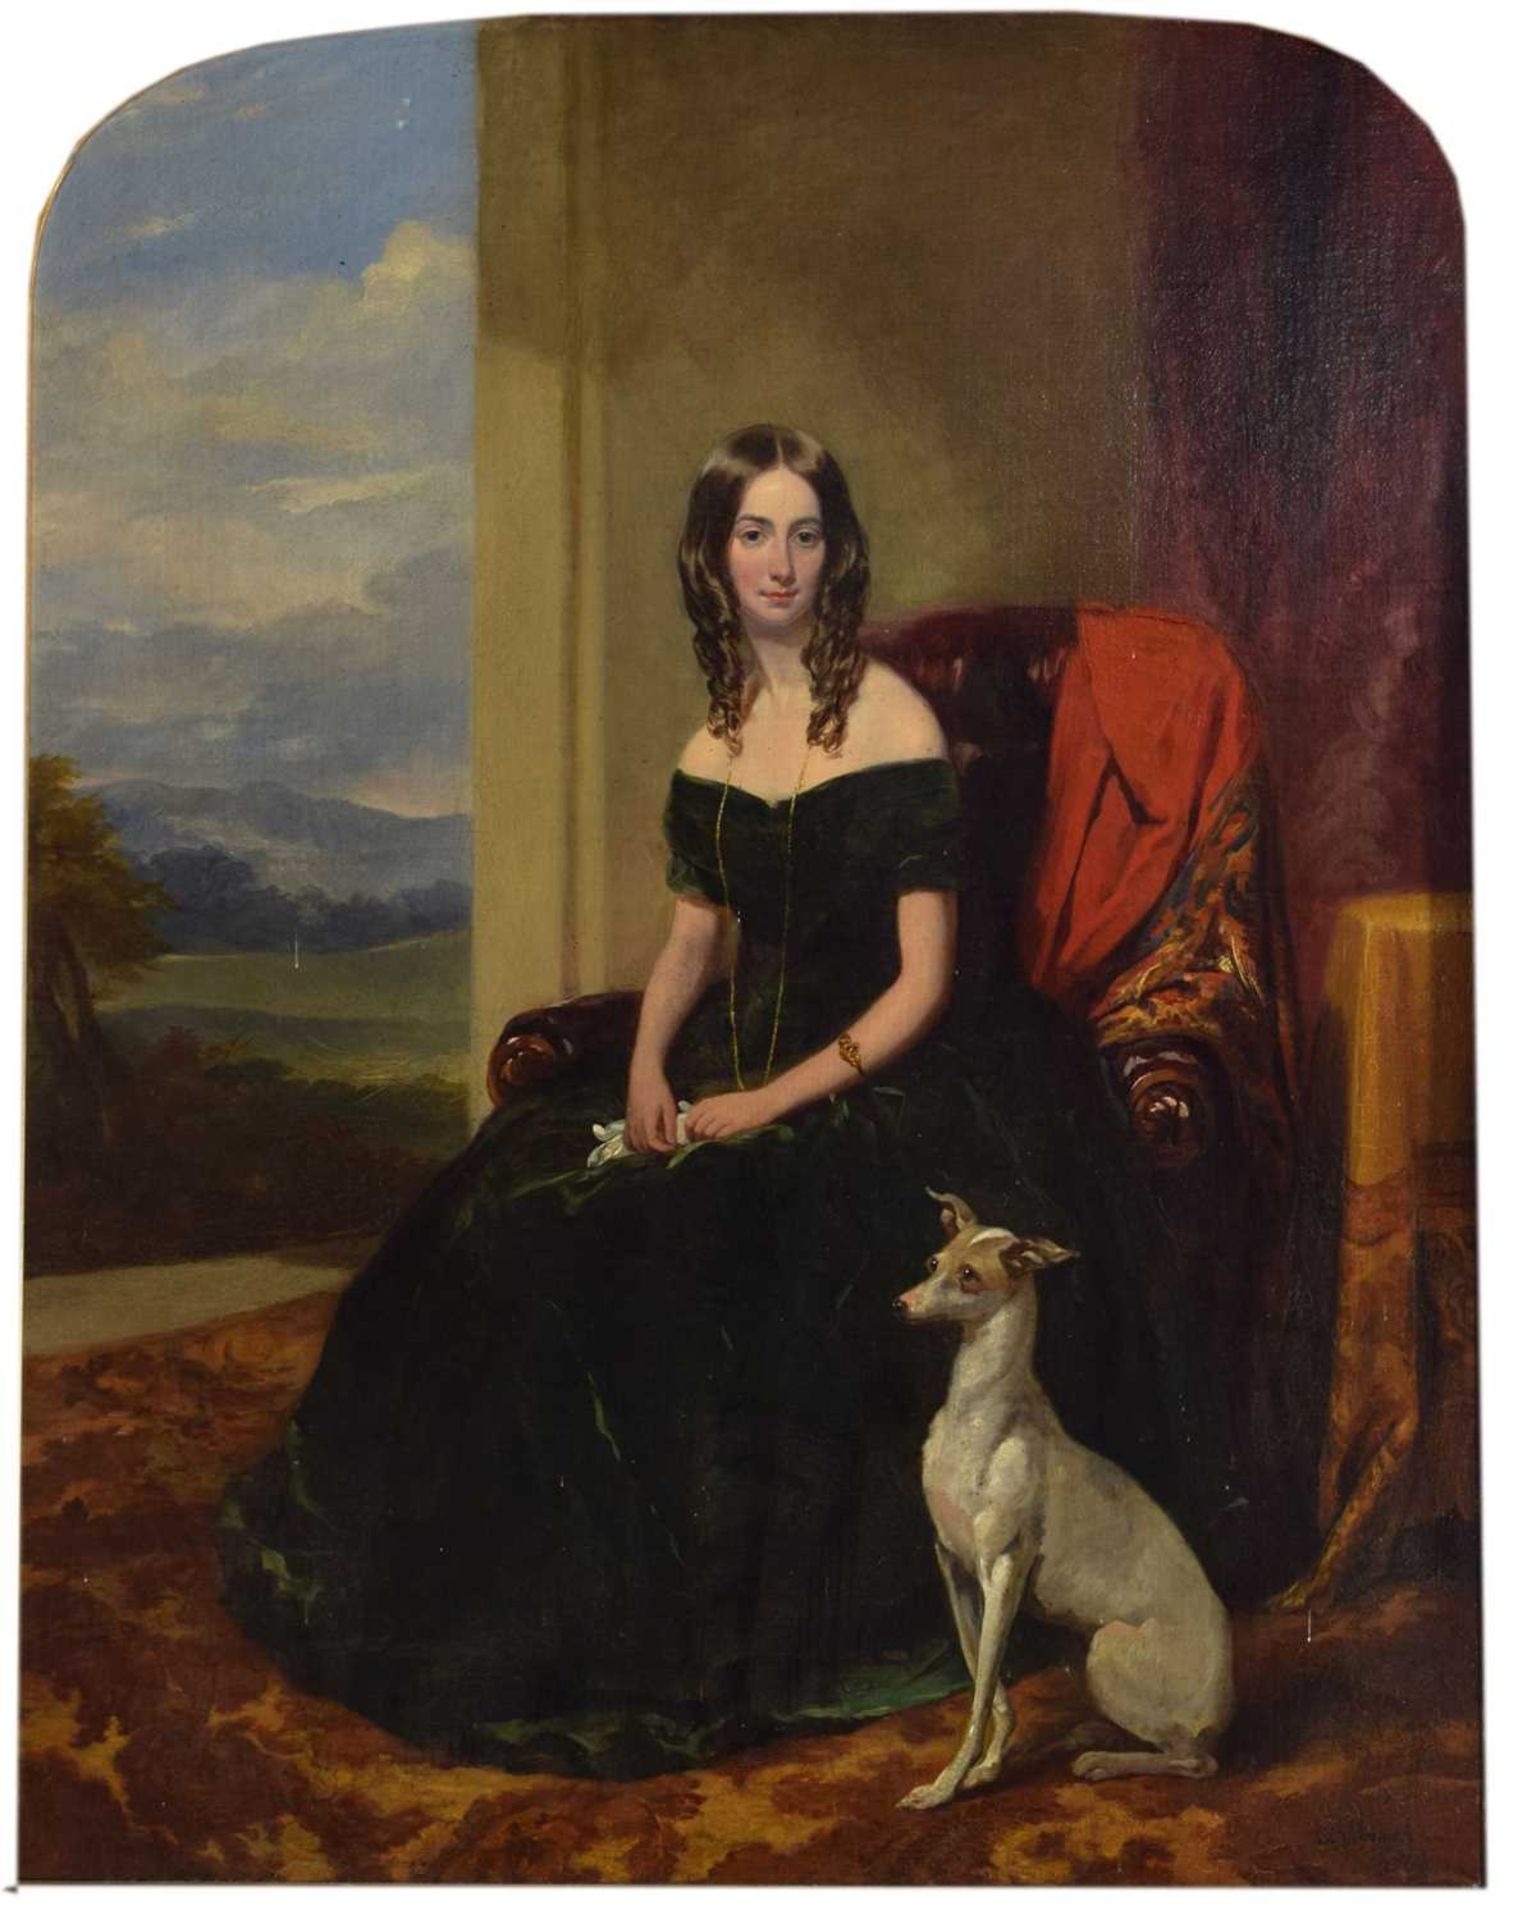 James Curnock, Snr. (1812-1870) – Oil on canvas - Elizabeth Plummer with dog